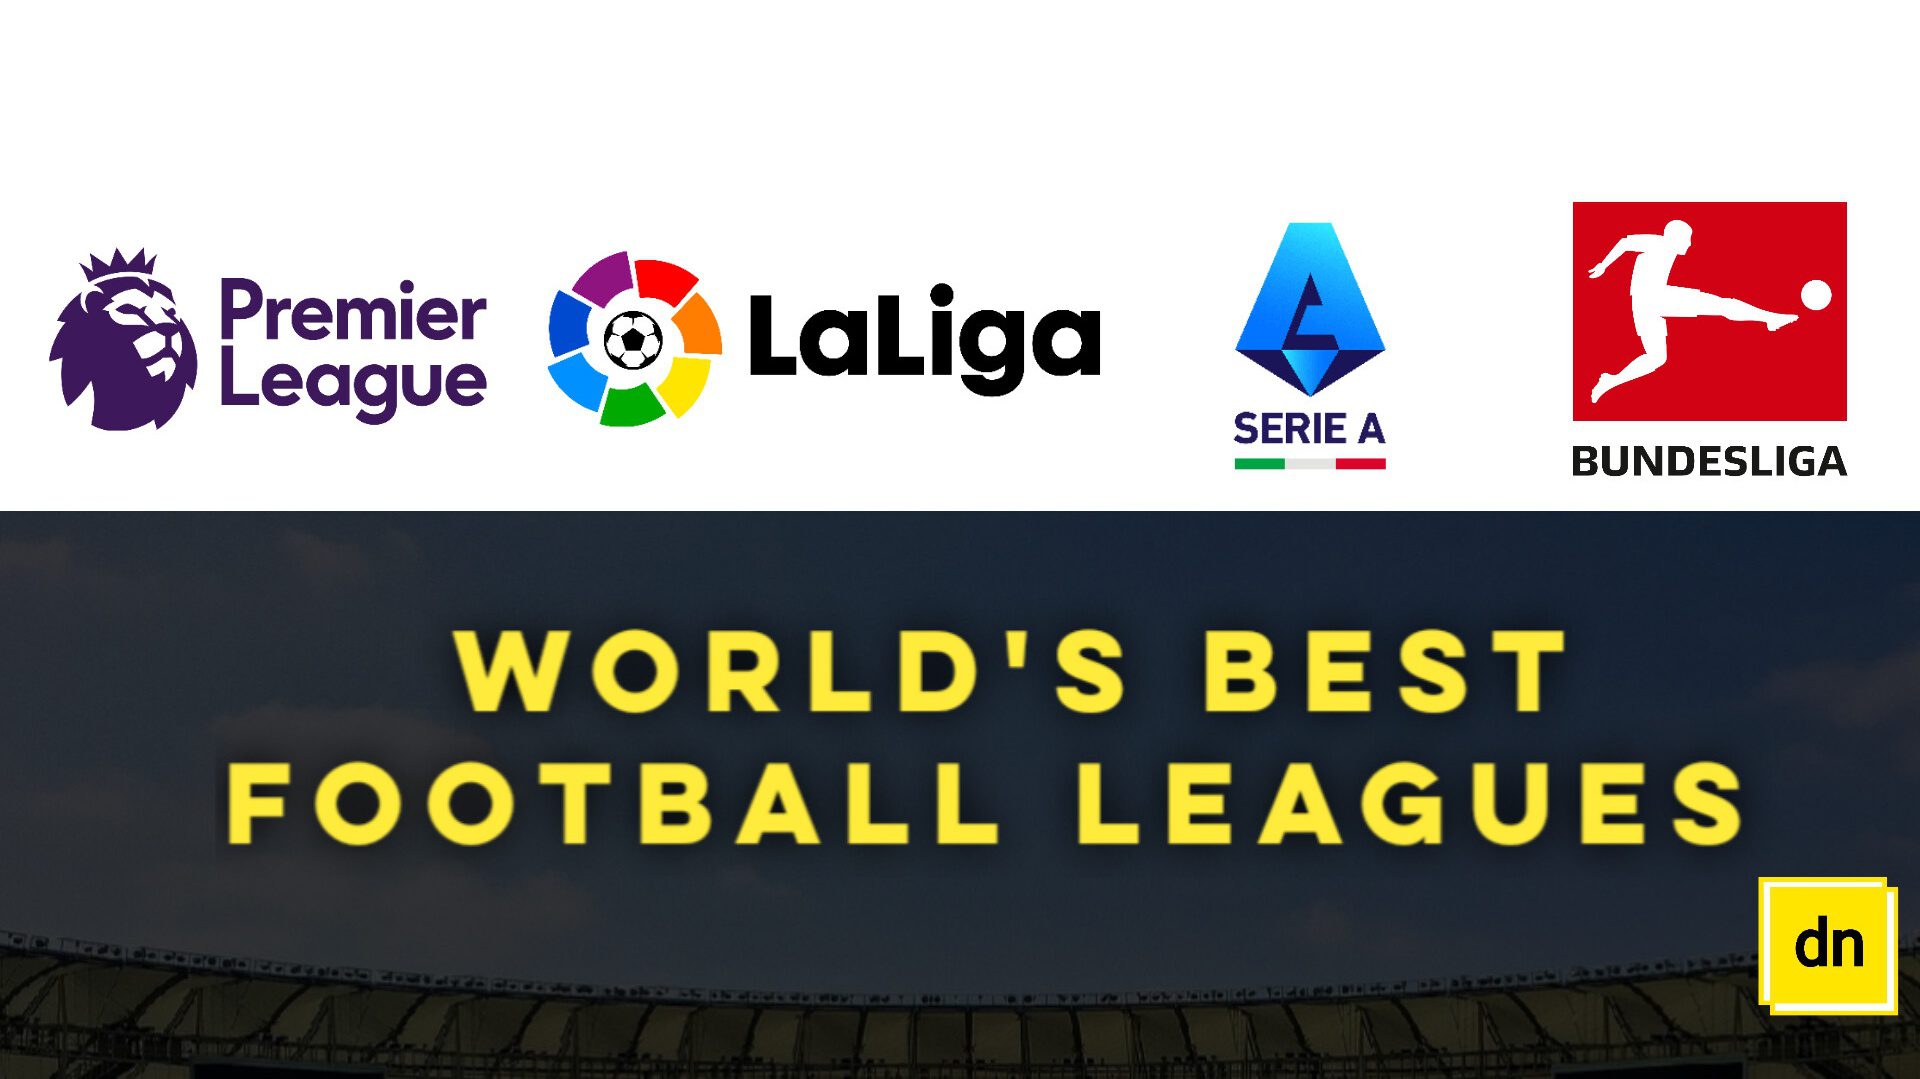 World's best football leagues